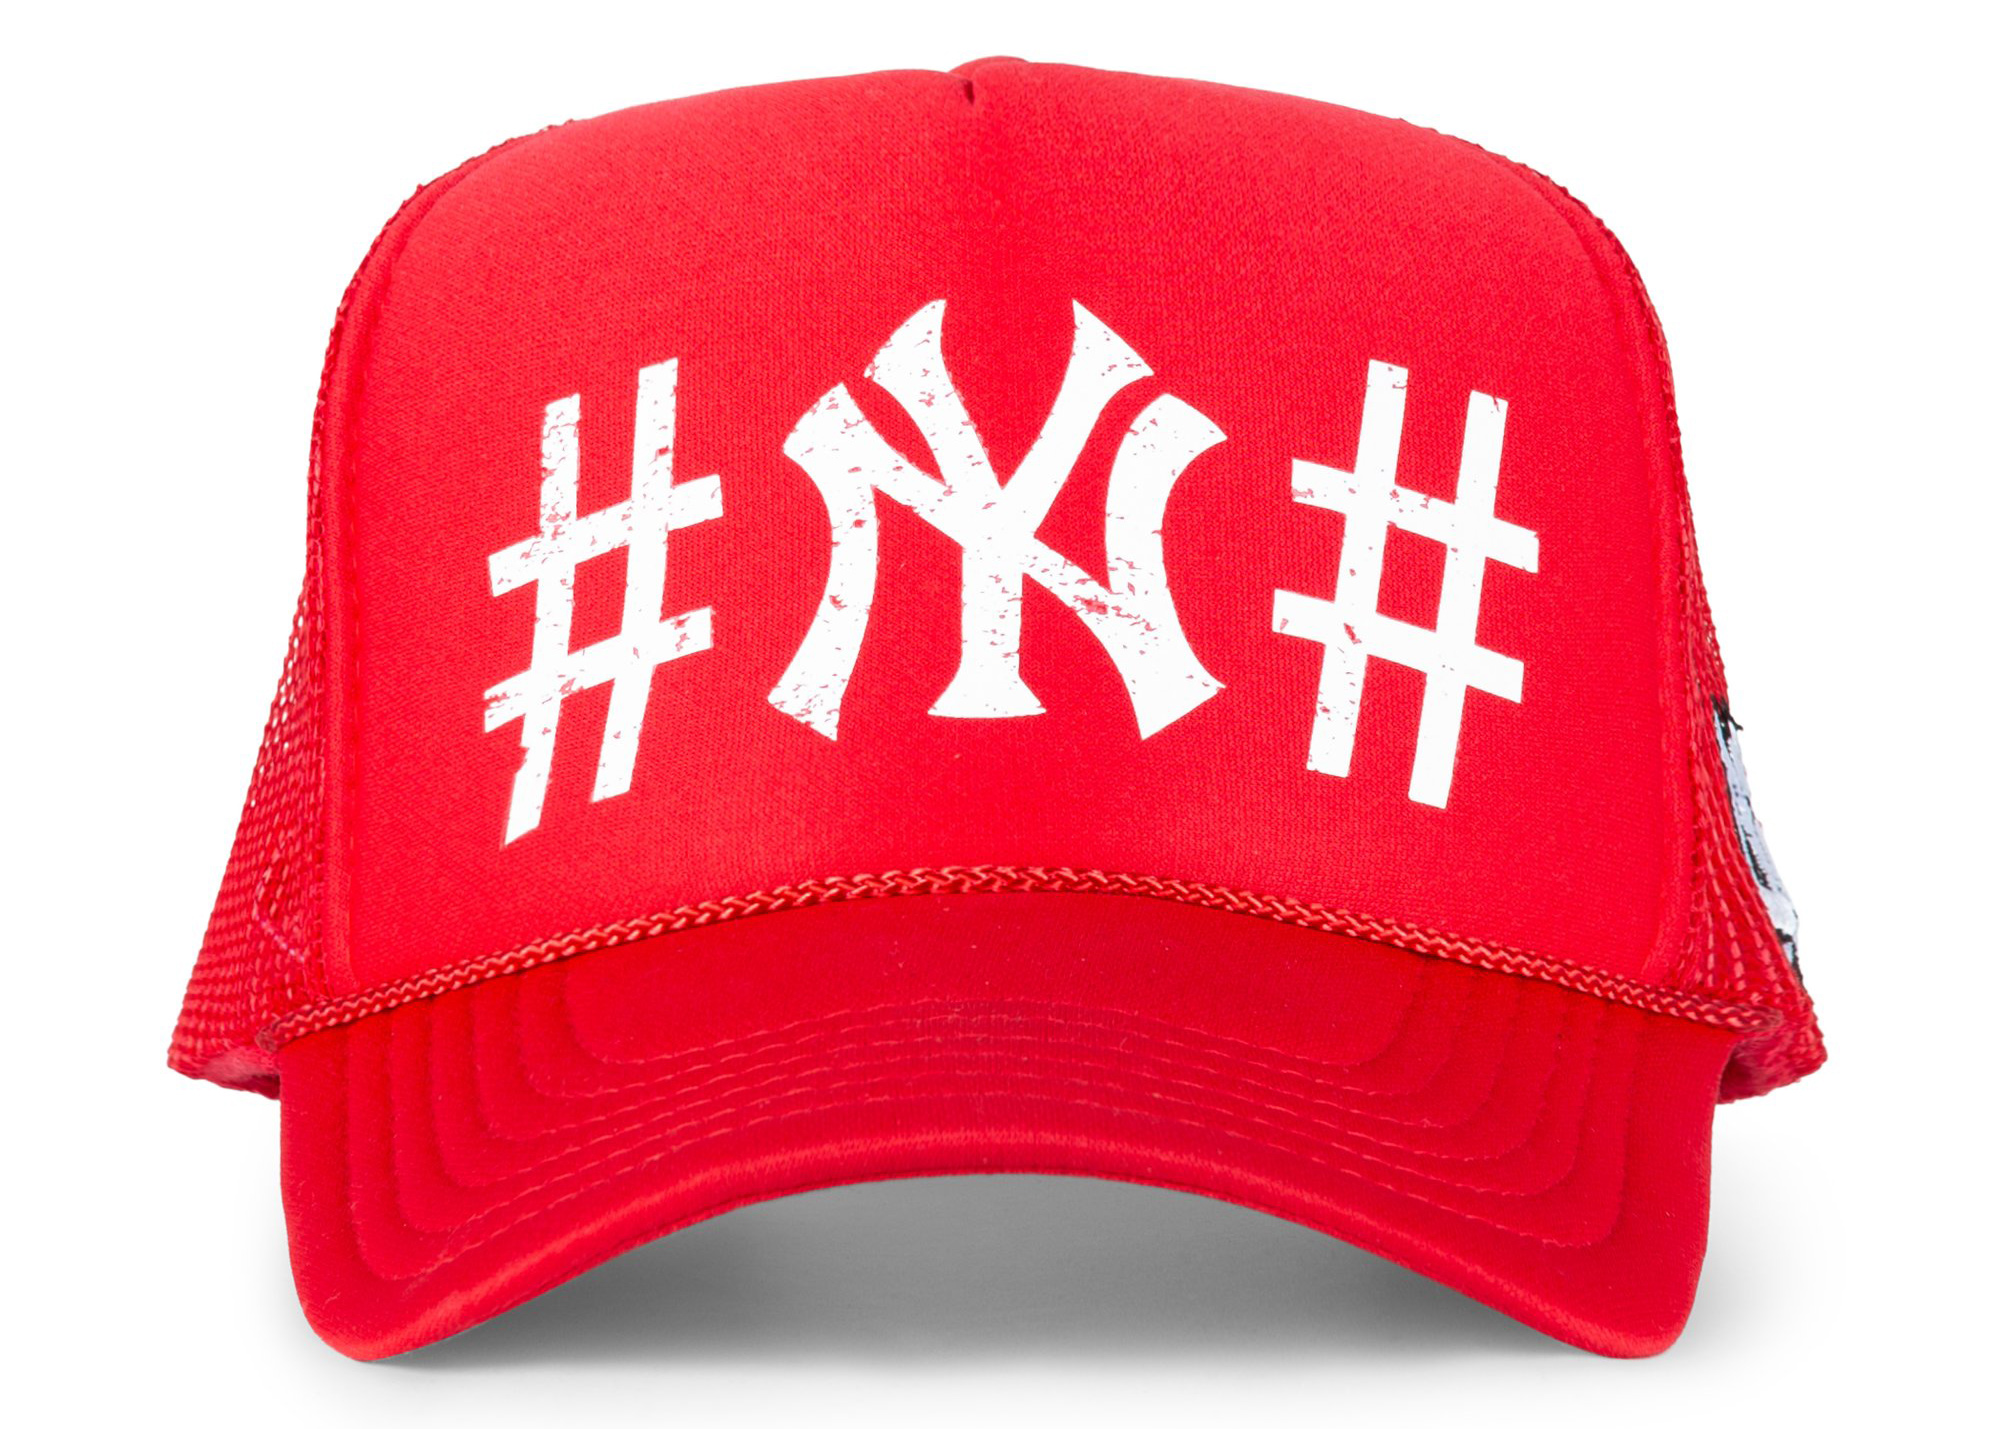 40 New York #NY# Trucker Hat Red - FW21 - US